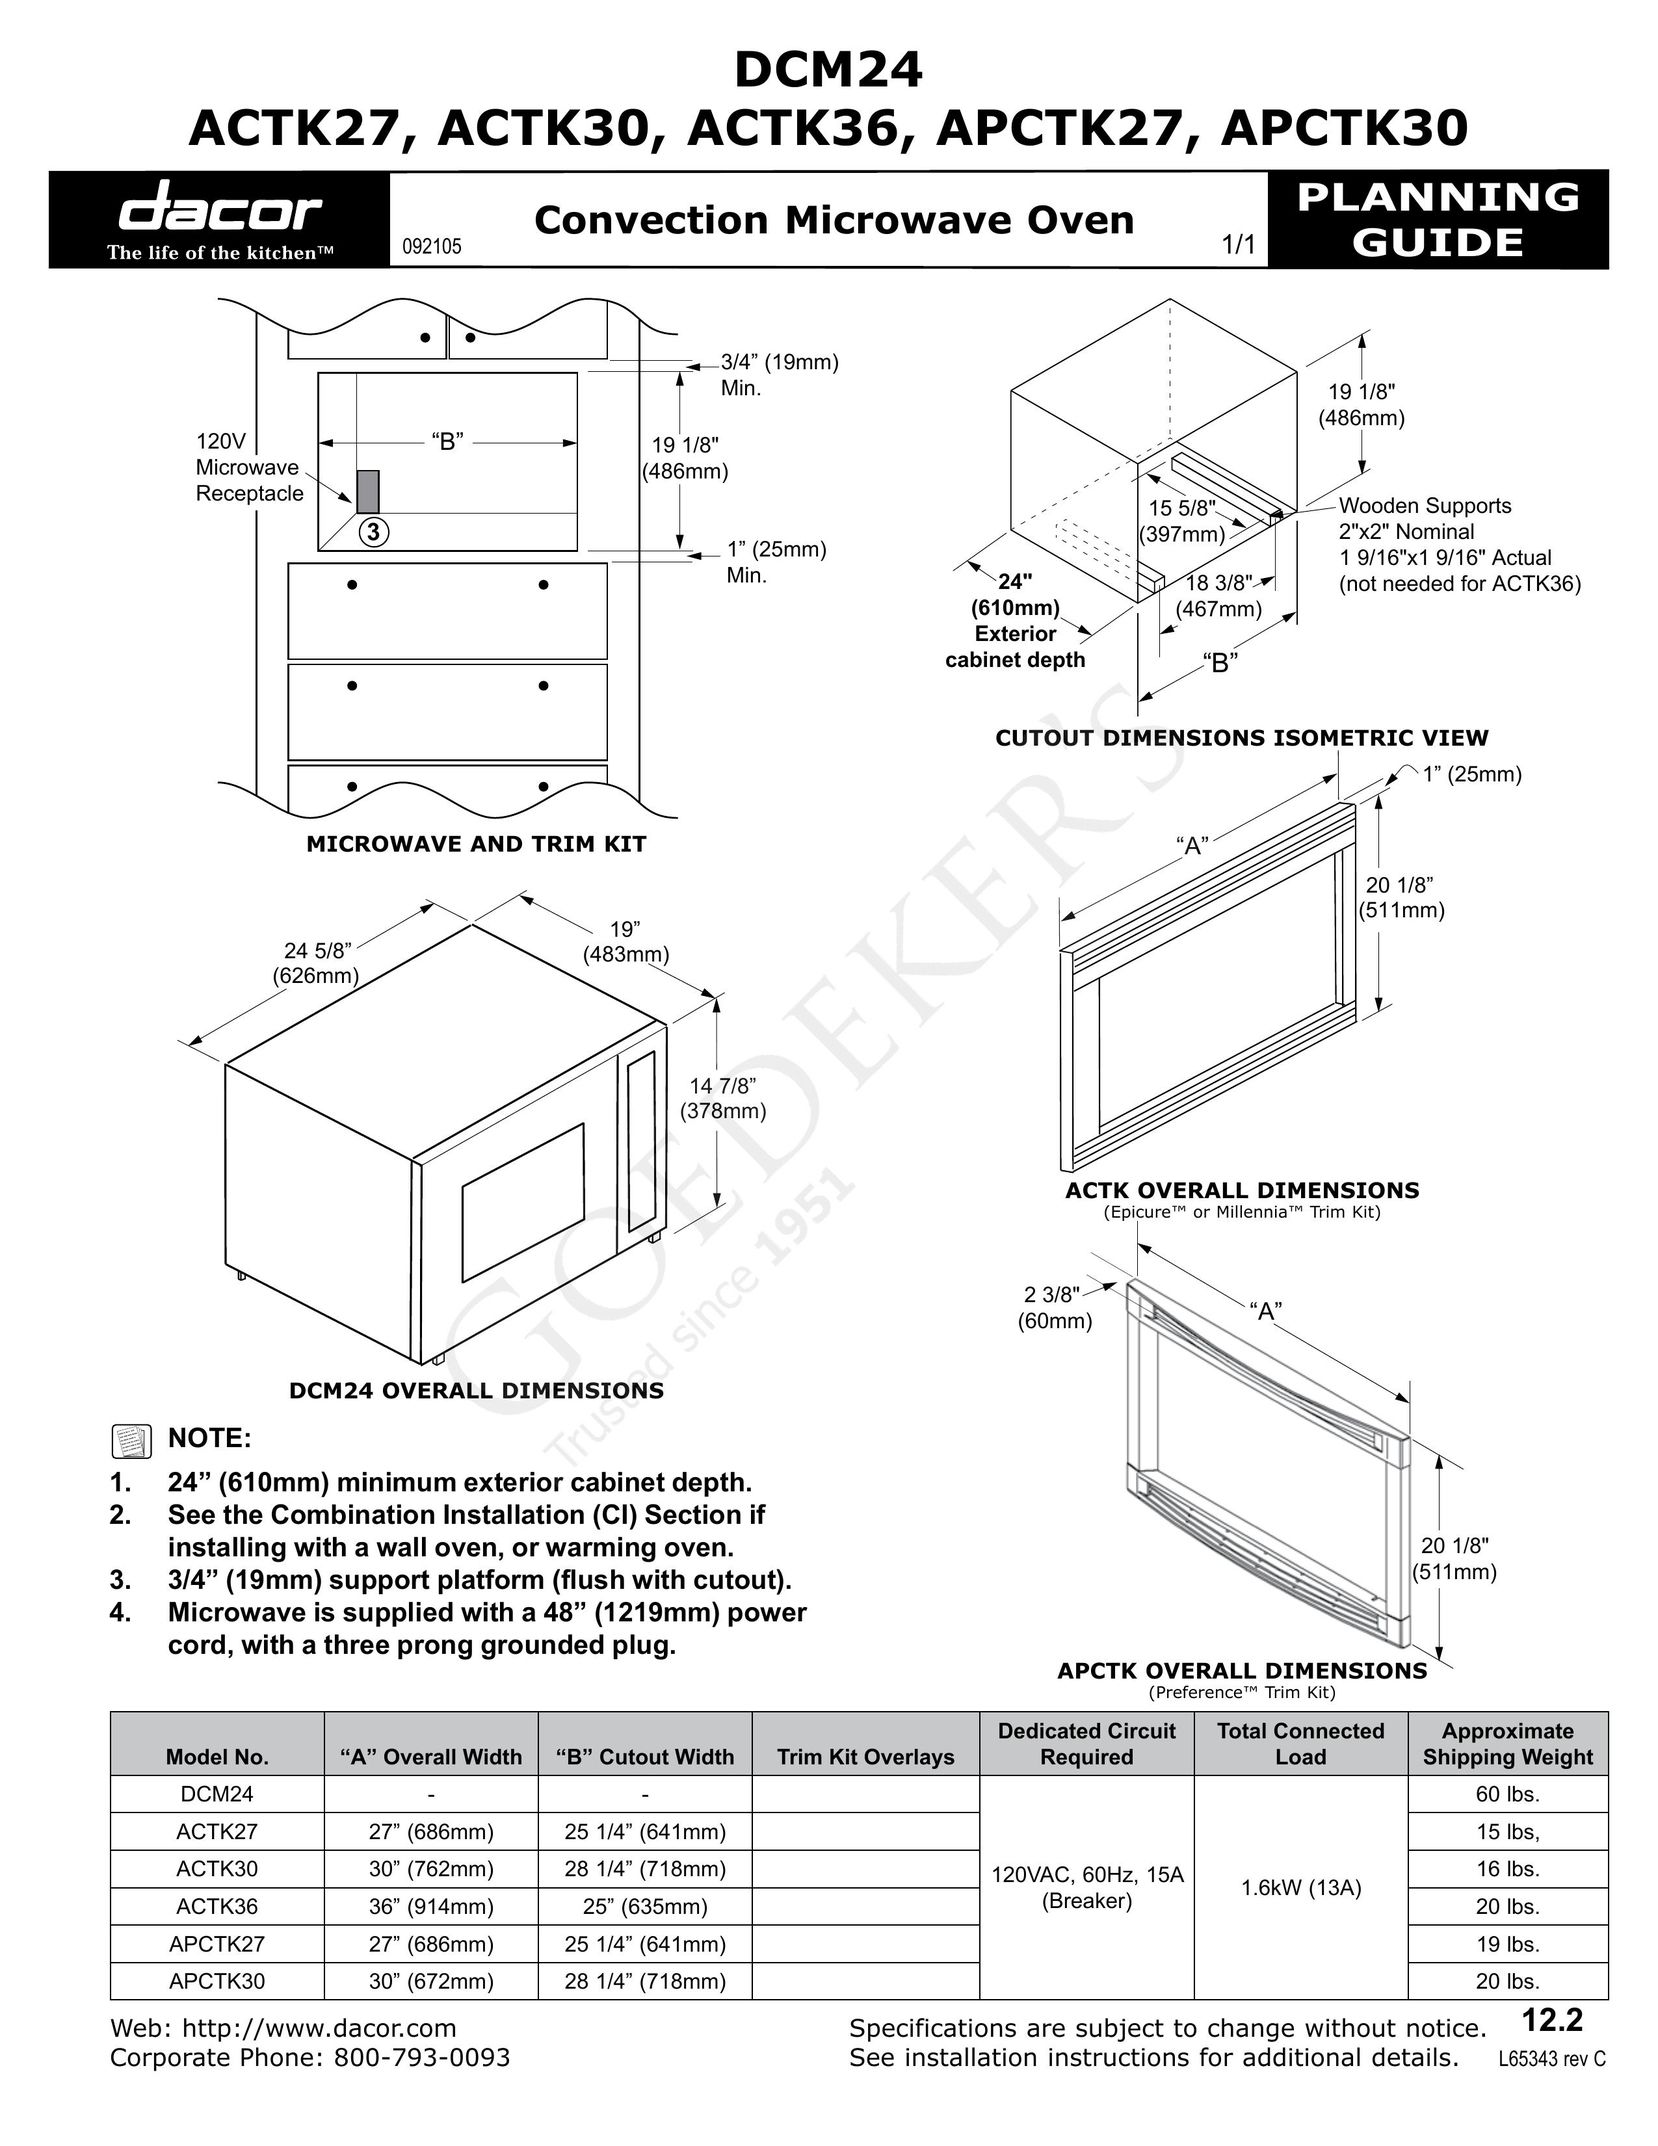 Dacor APCTK30 Microwave Oven User Manual